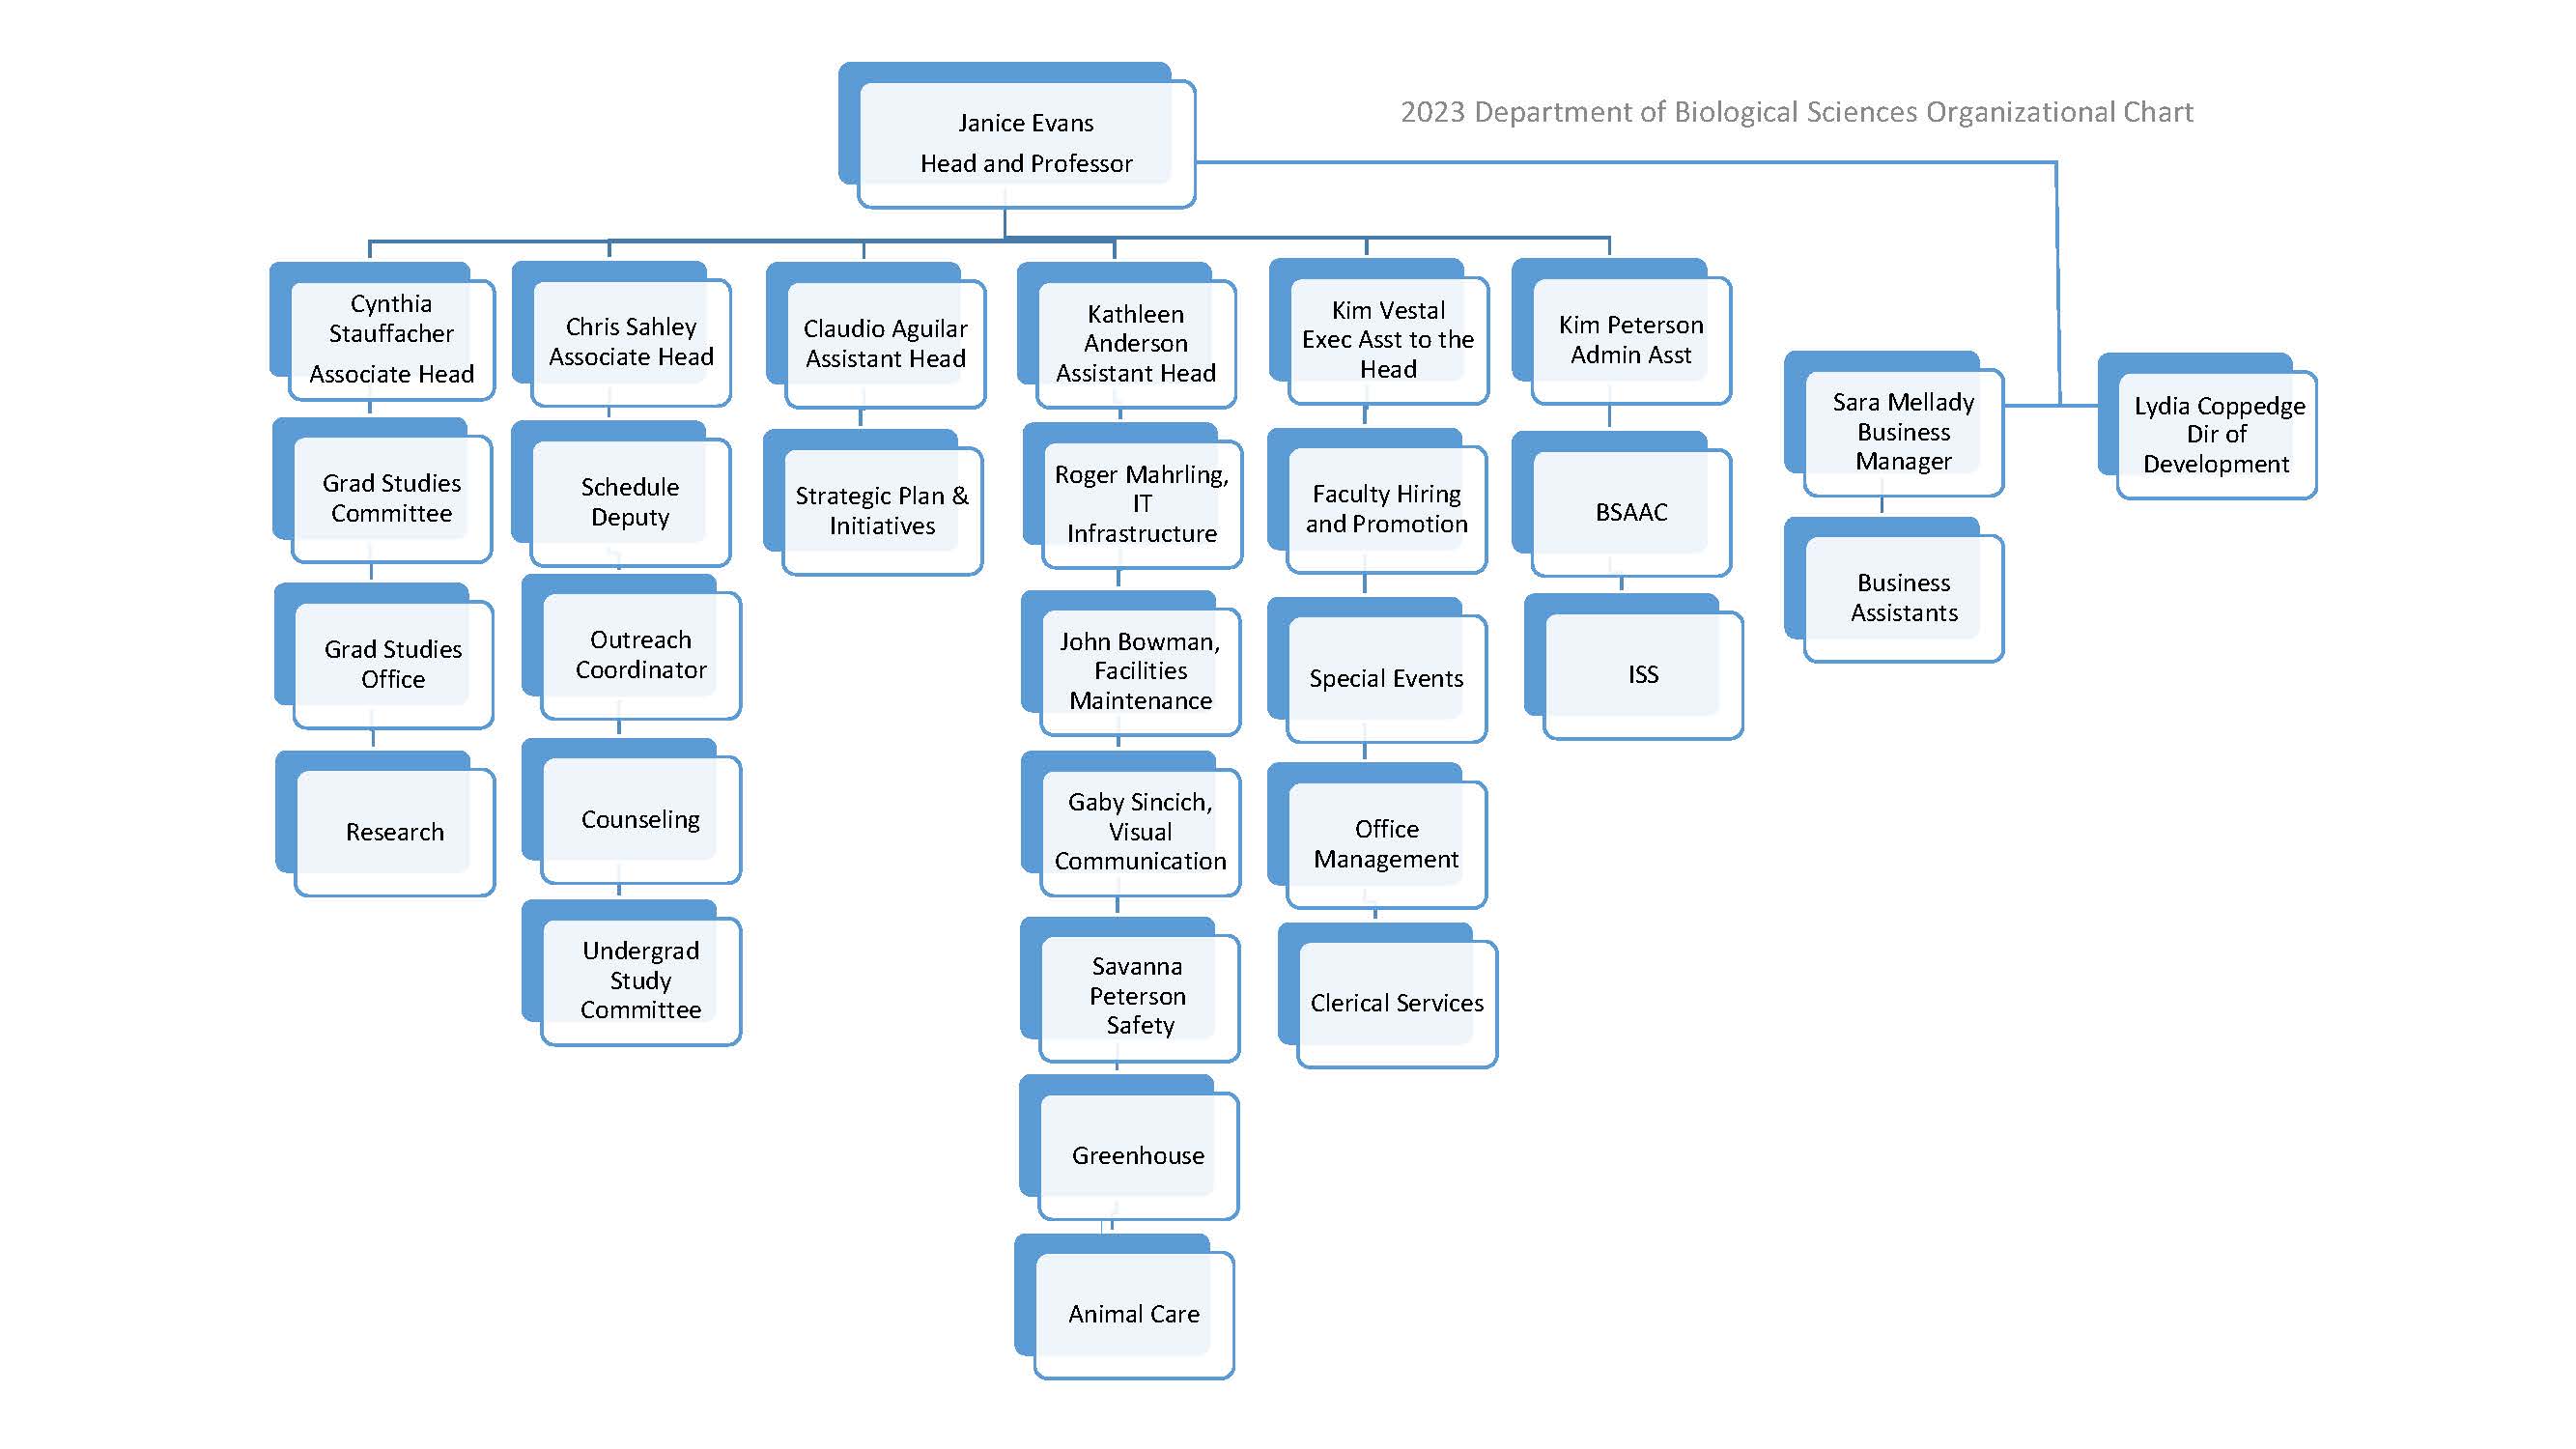 Organizational-Chart-3-30-23.jpg